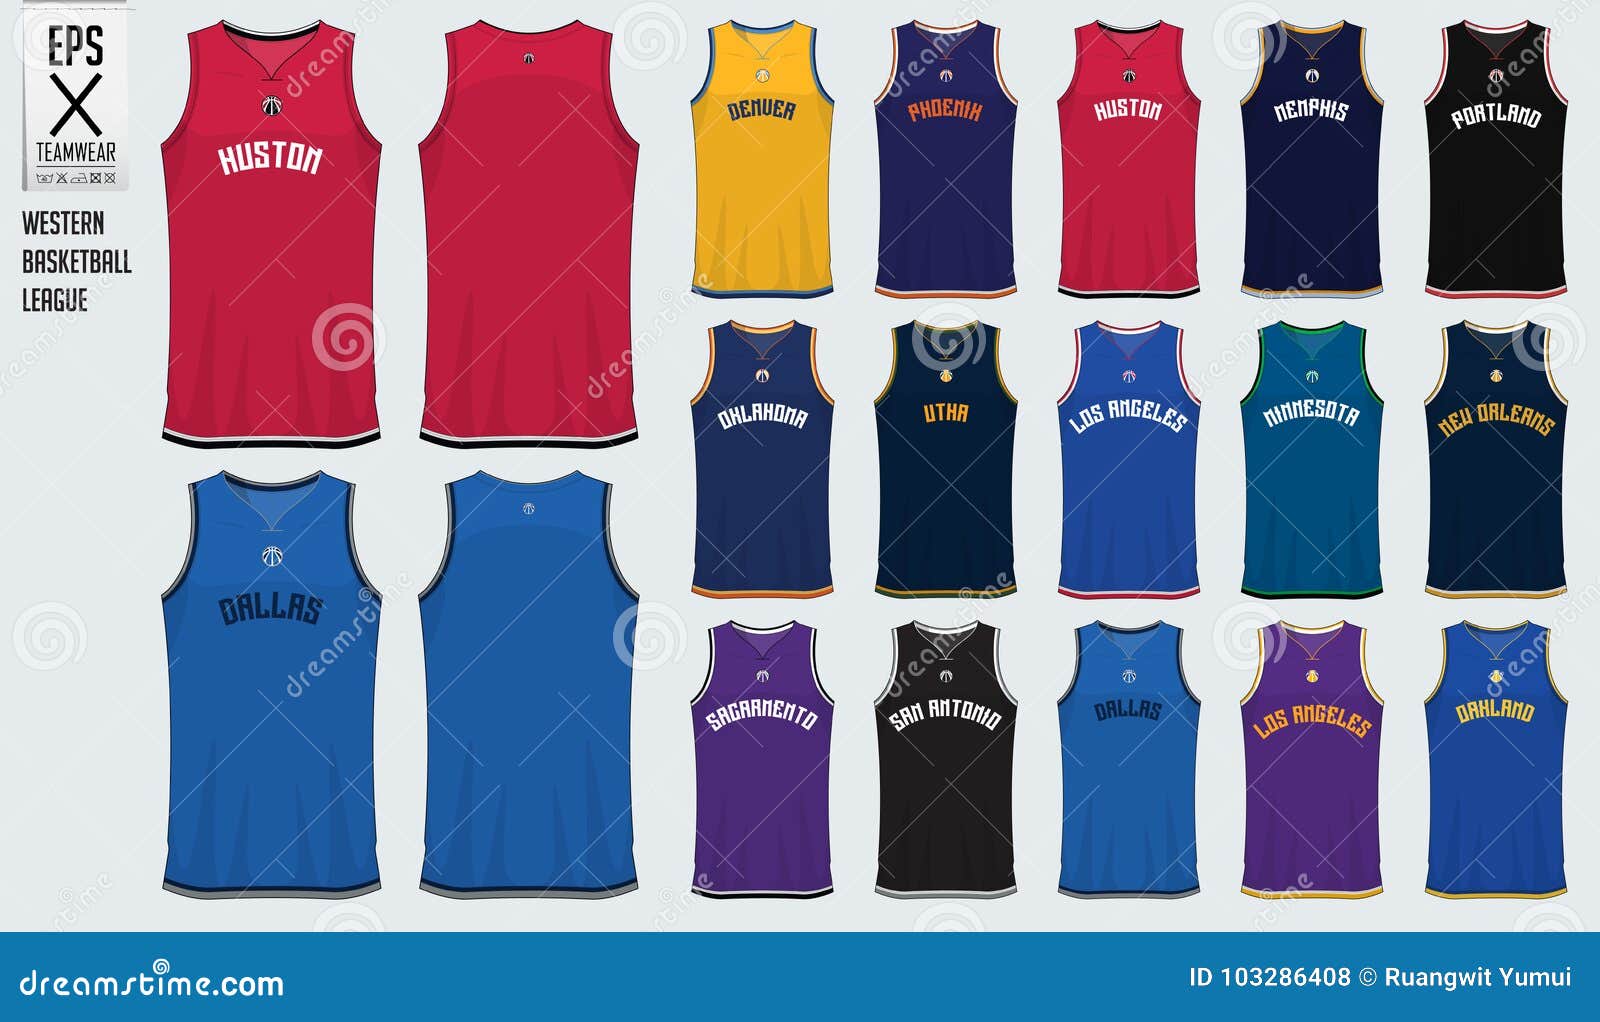 Download Basketball Uniform Template Design Tank Top T Shirt Mockup For Basketball Club In Usa Western Basketball Division Stock Vector Illustration Of Portland Shirt 103286408